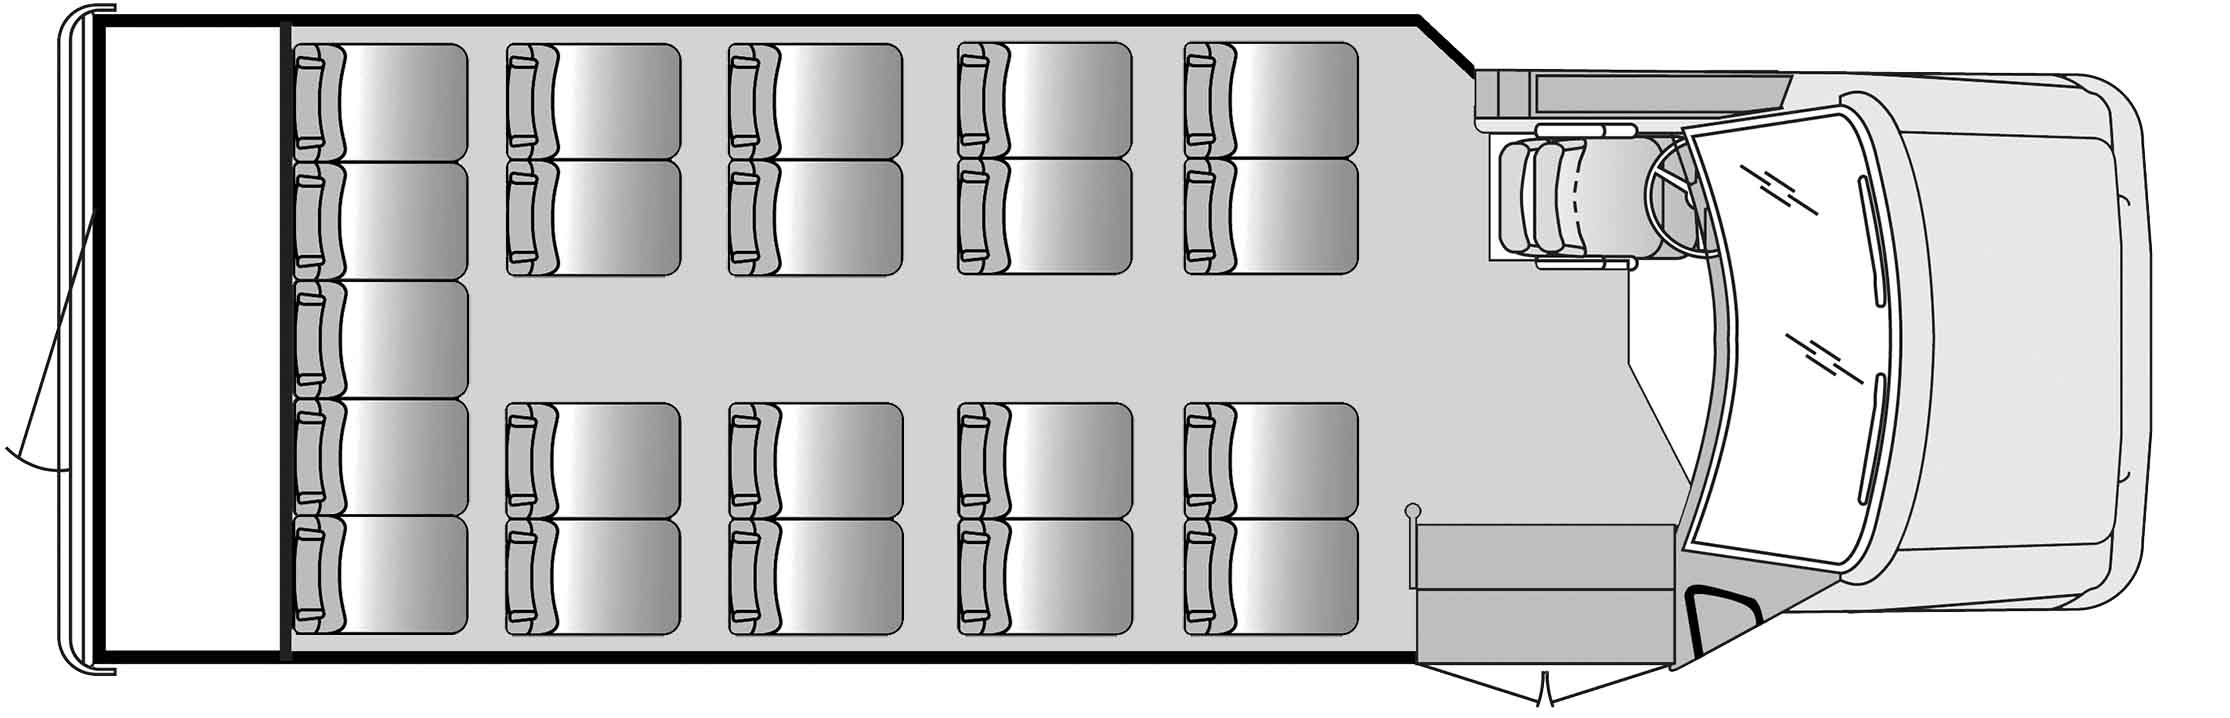 21 Passenger with Rear Luggage Plus Driver Floorplan Image